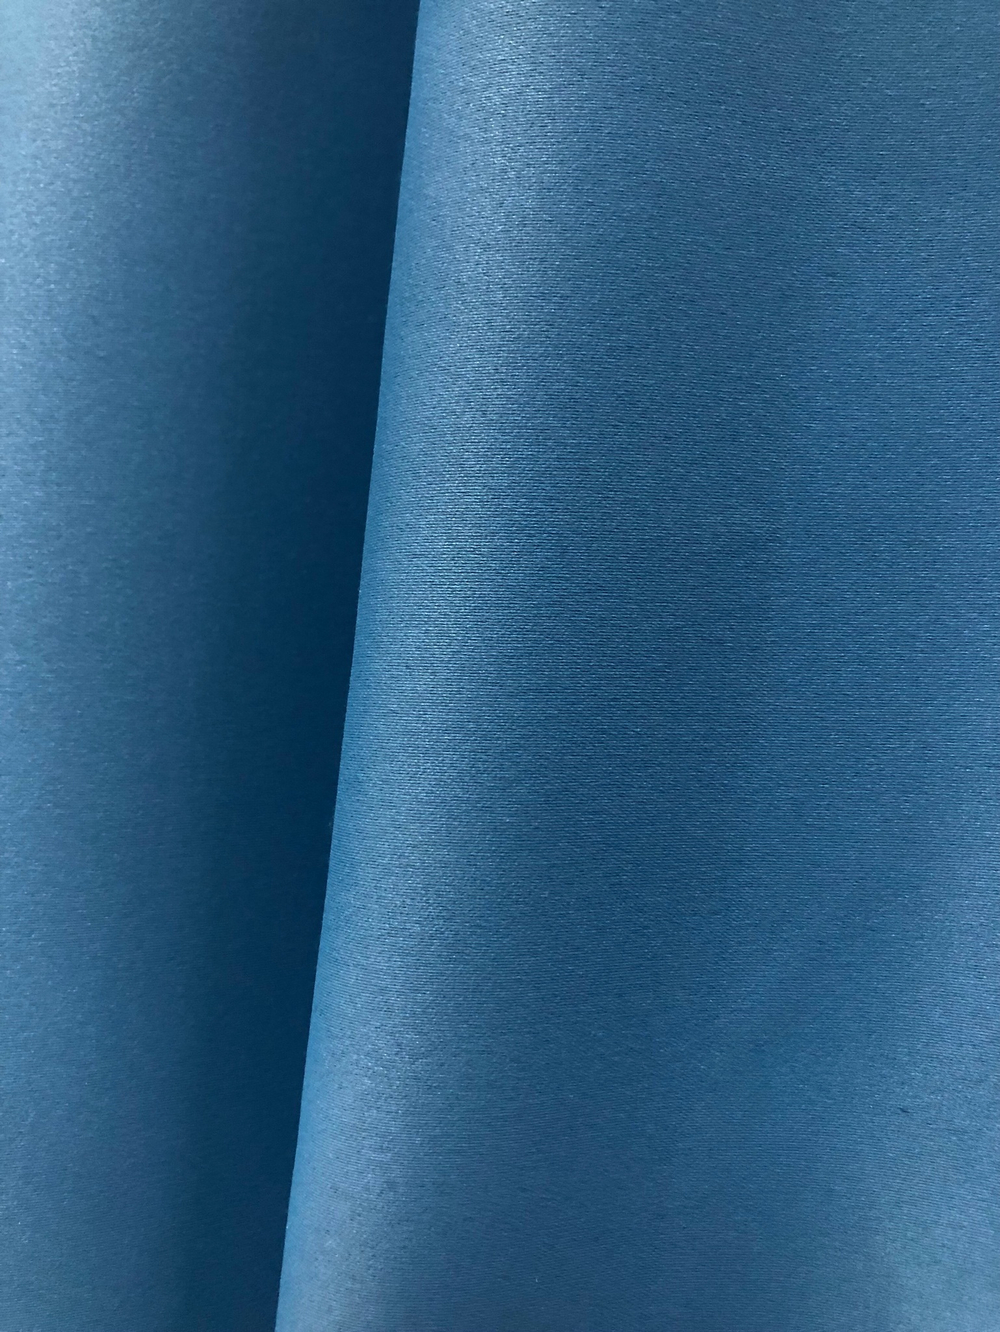 Ткань портьерная блэкаут, матовый, цвет голубой, артикул 327318